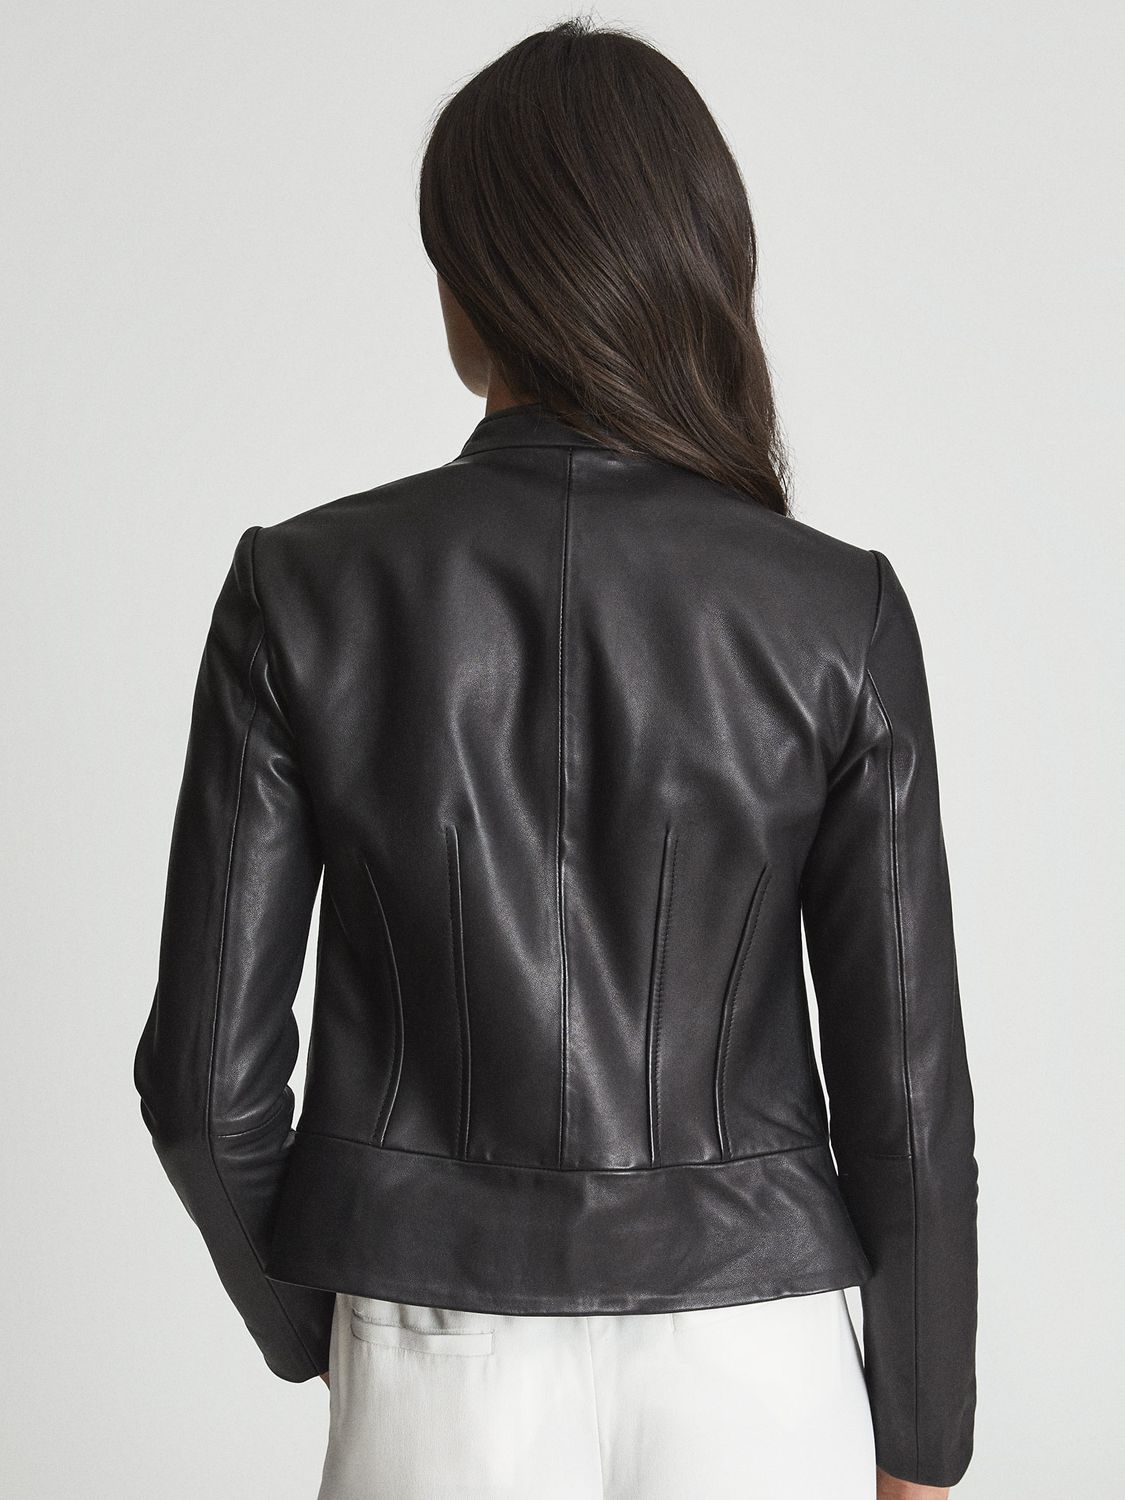 Reiss Allie Leather Biker Jacket, Black, 6